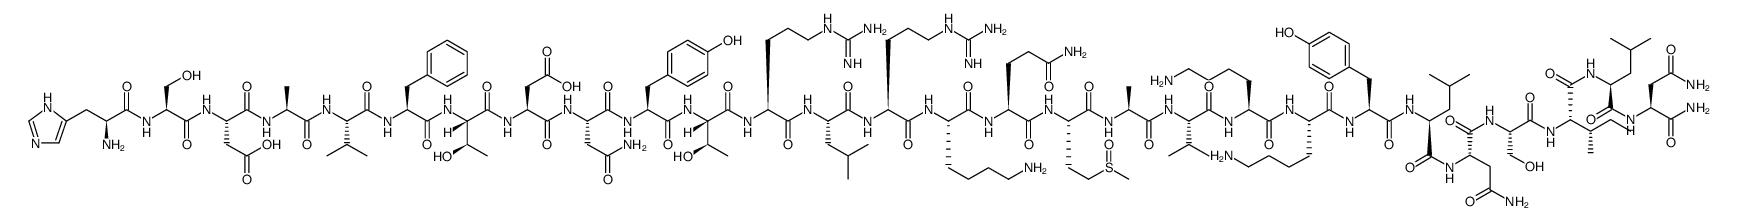 VIP sulfoxide (human, mouse, rat) trifluoroacetate salt structure